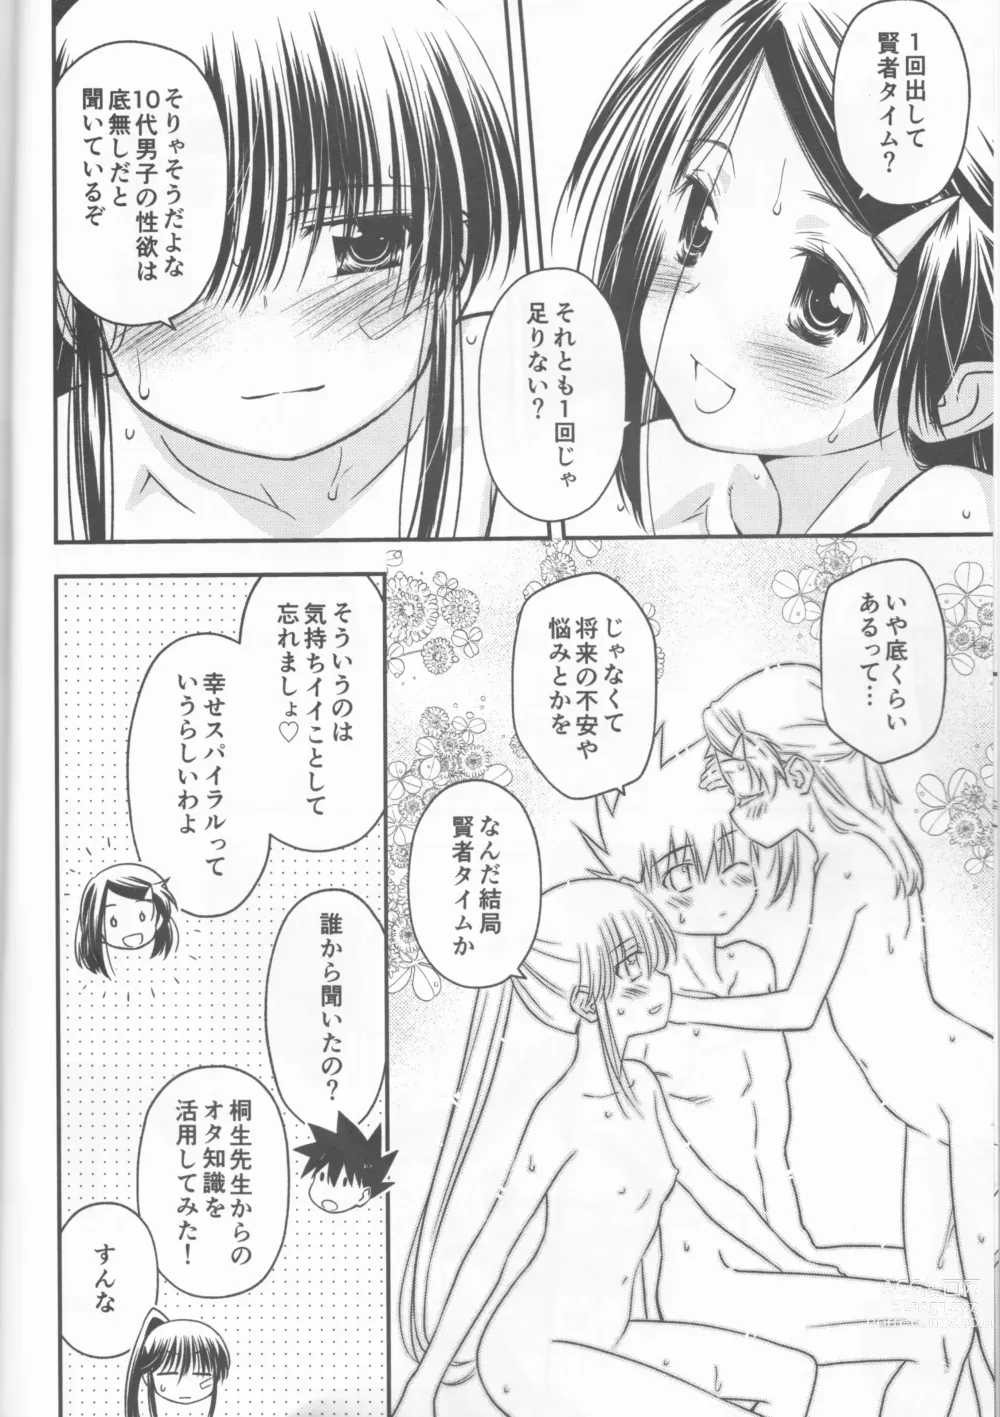 Page 7 of doujinshi kxs.